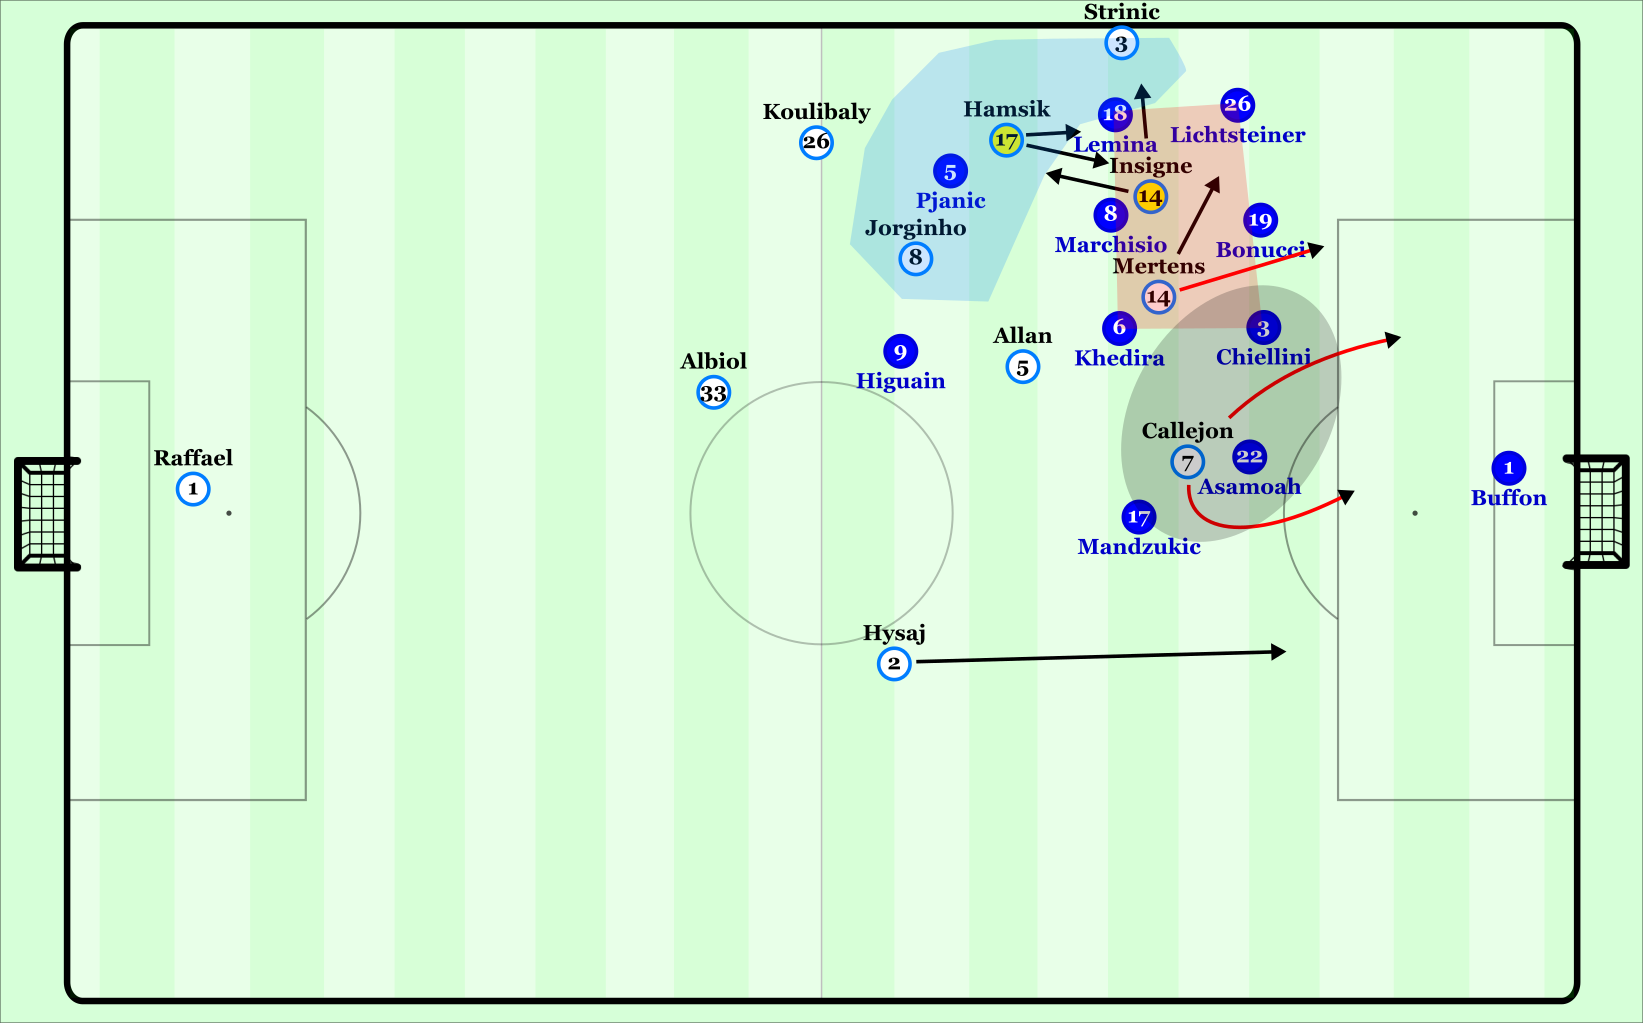 Napoli's left-sided attacks.